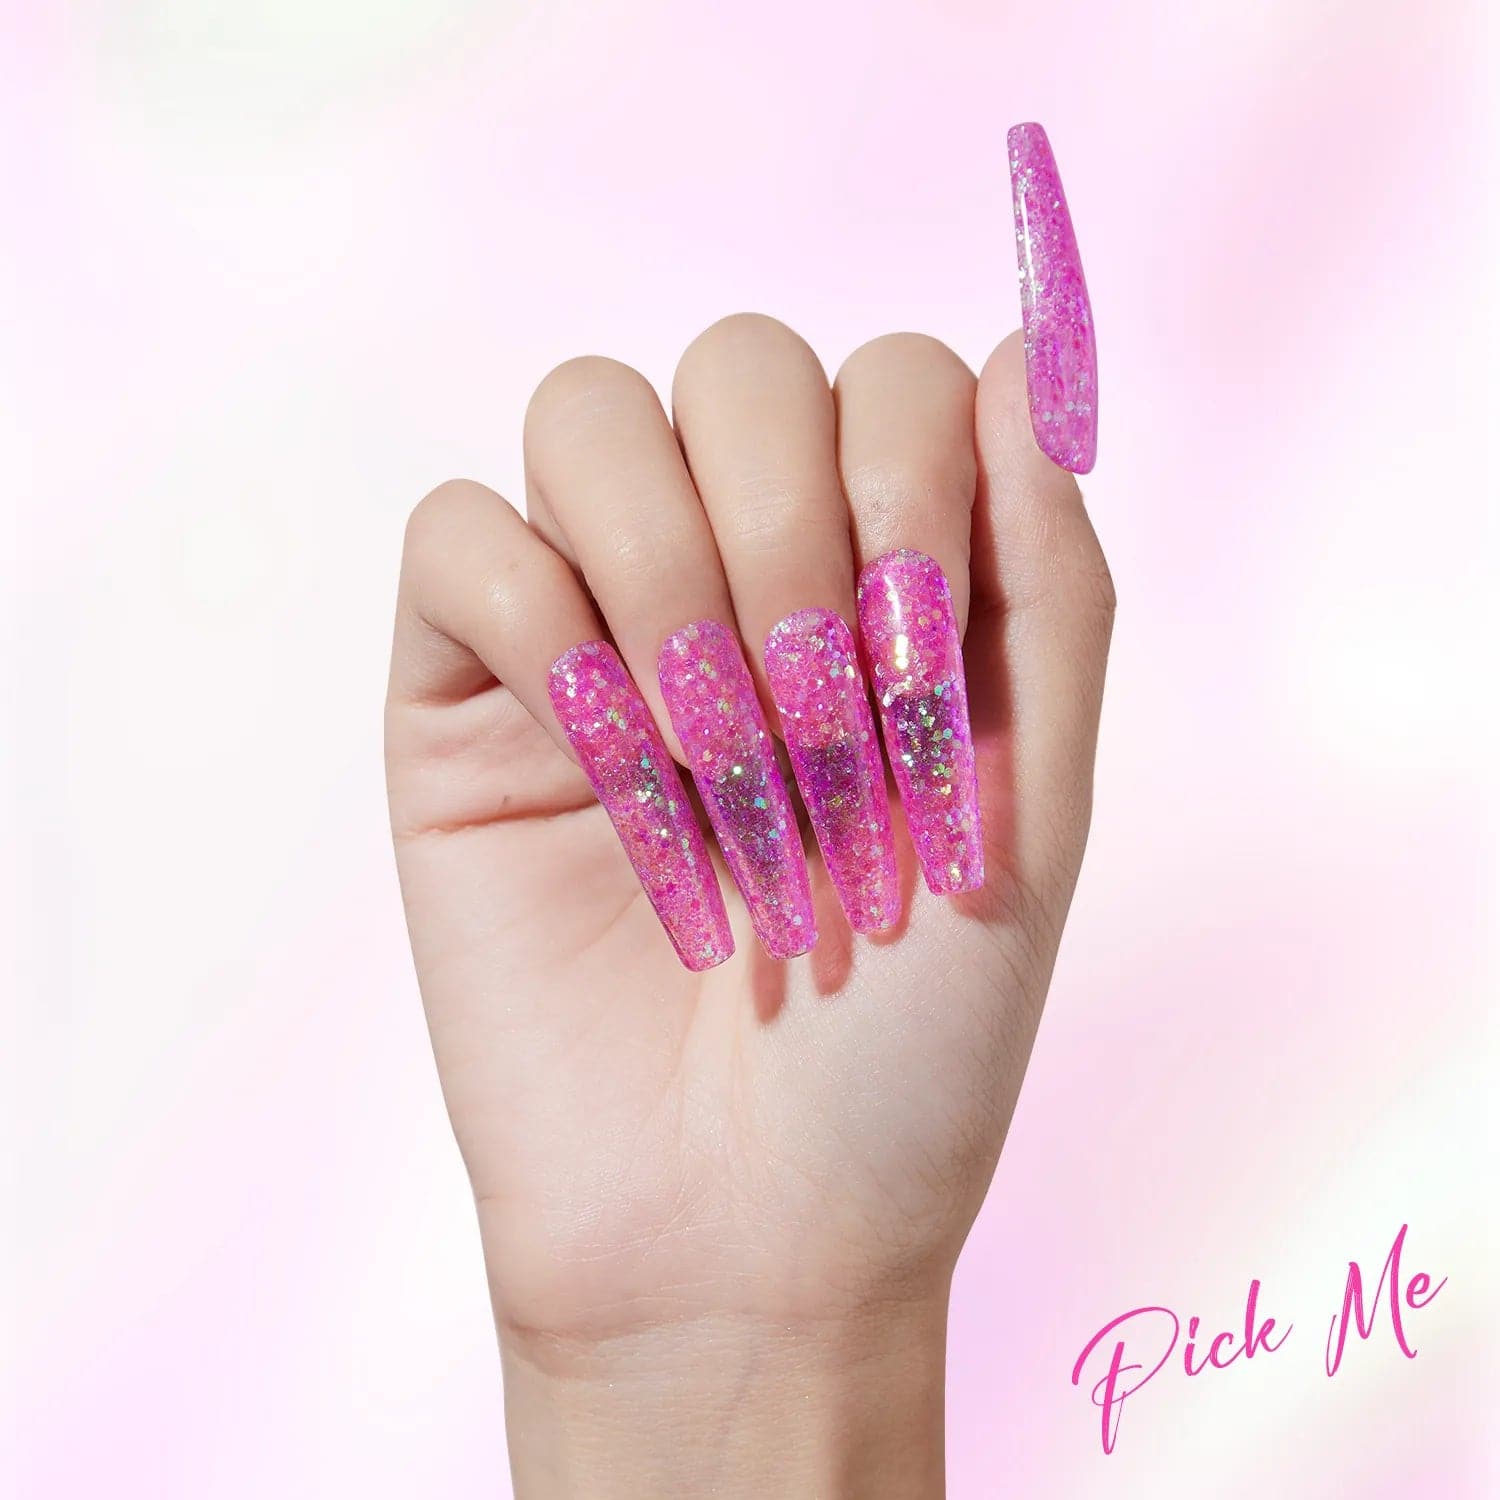 Pick Me - Nail Art Glitter - MODELONES.com